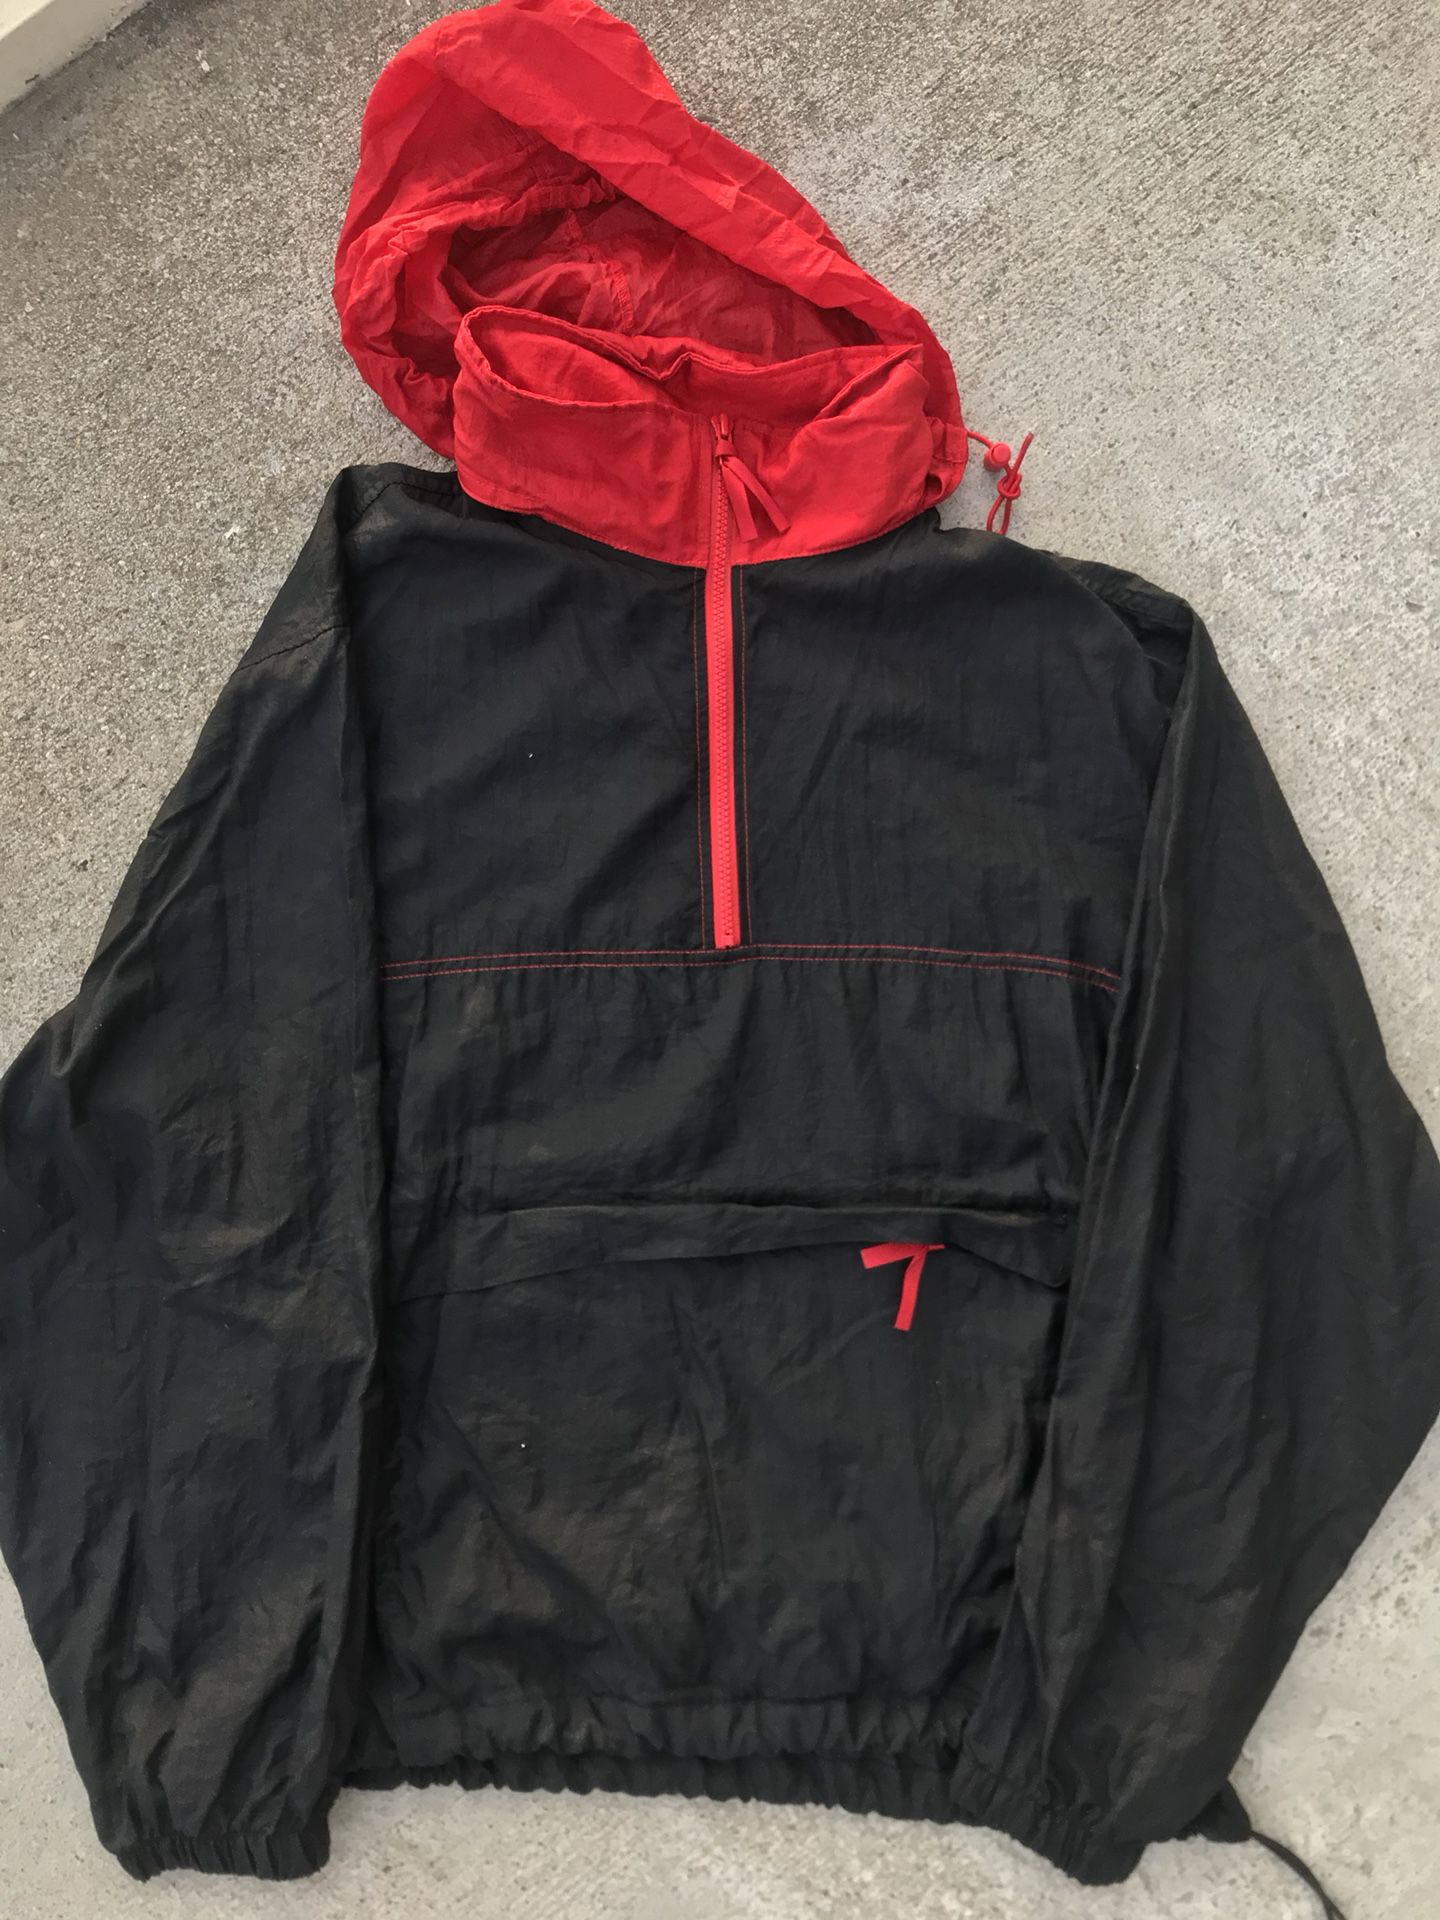 1999 Marlboro Jacket - Size L